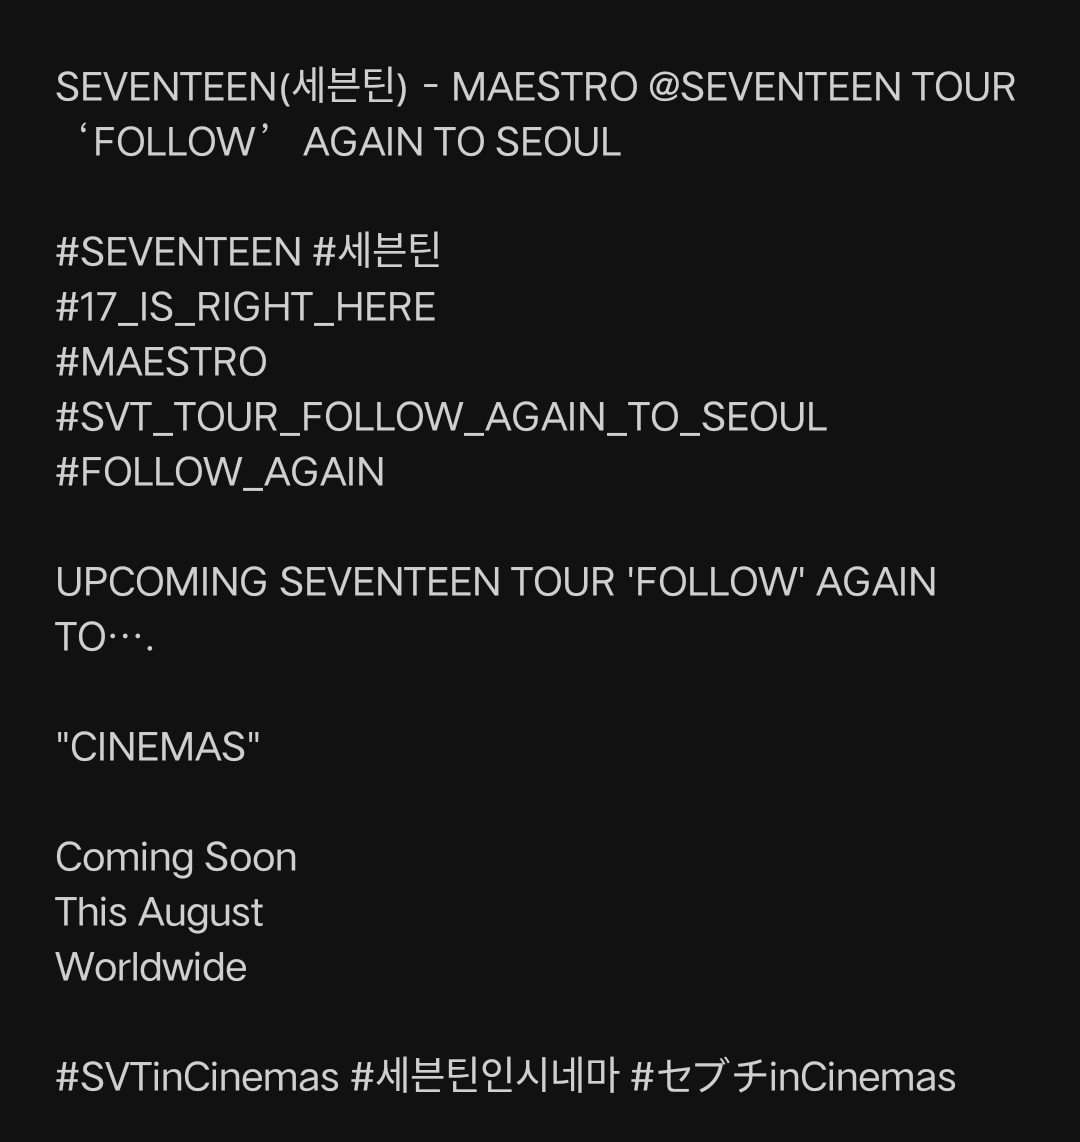 [#INFO] SEGERA!! SEVENTEEN Follow Again To Seoul in Cinemas Agustus ini dengan penayangan Worldwide. @pledis_17 #SEVENTEEN #세븐틴 #MAESTRO